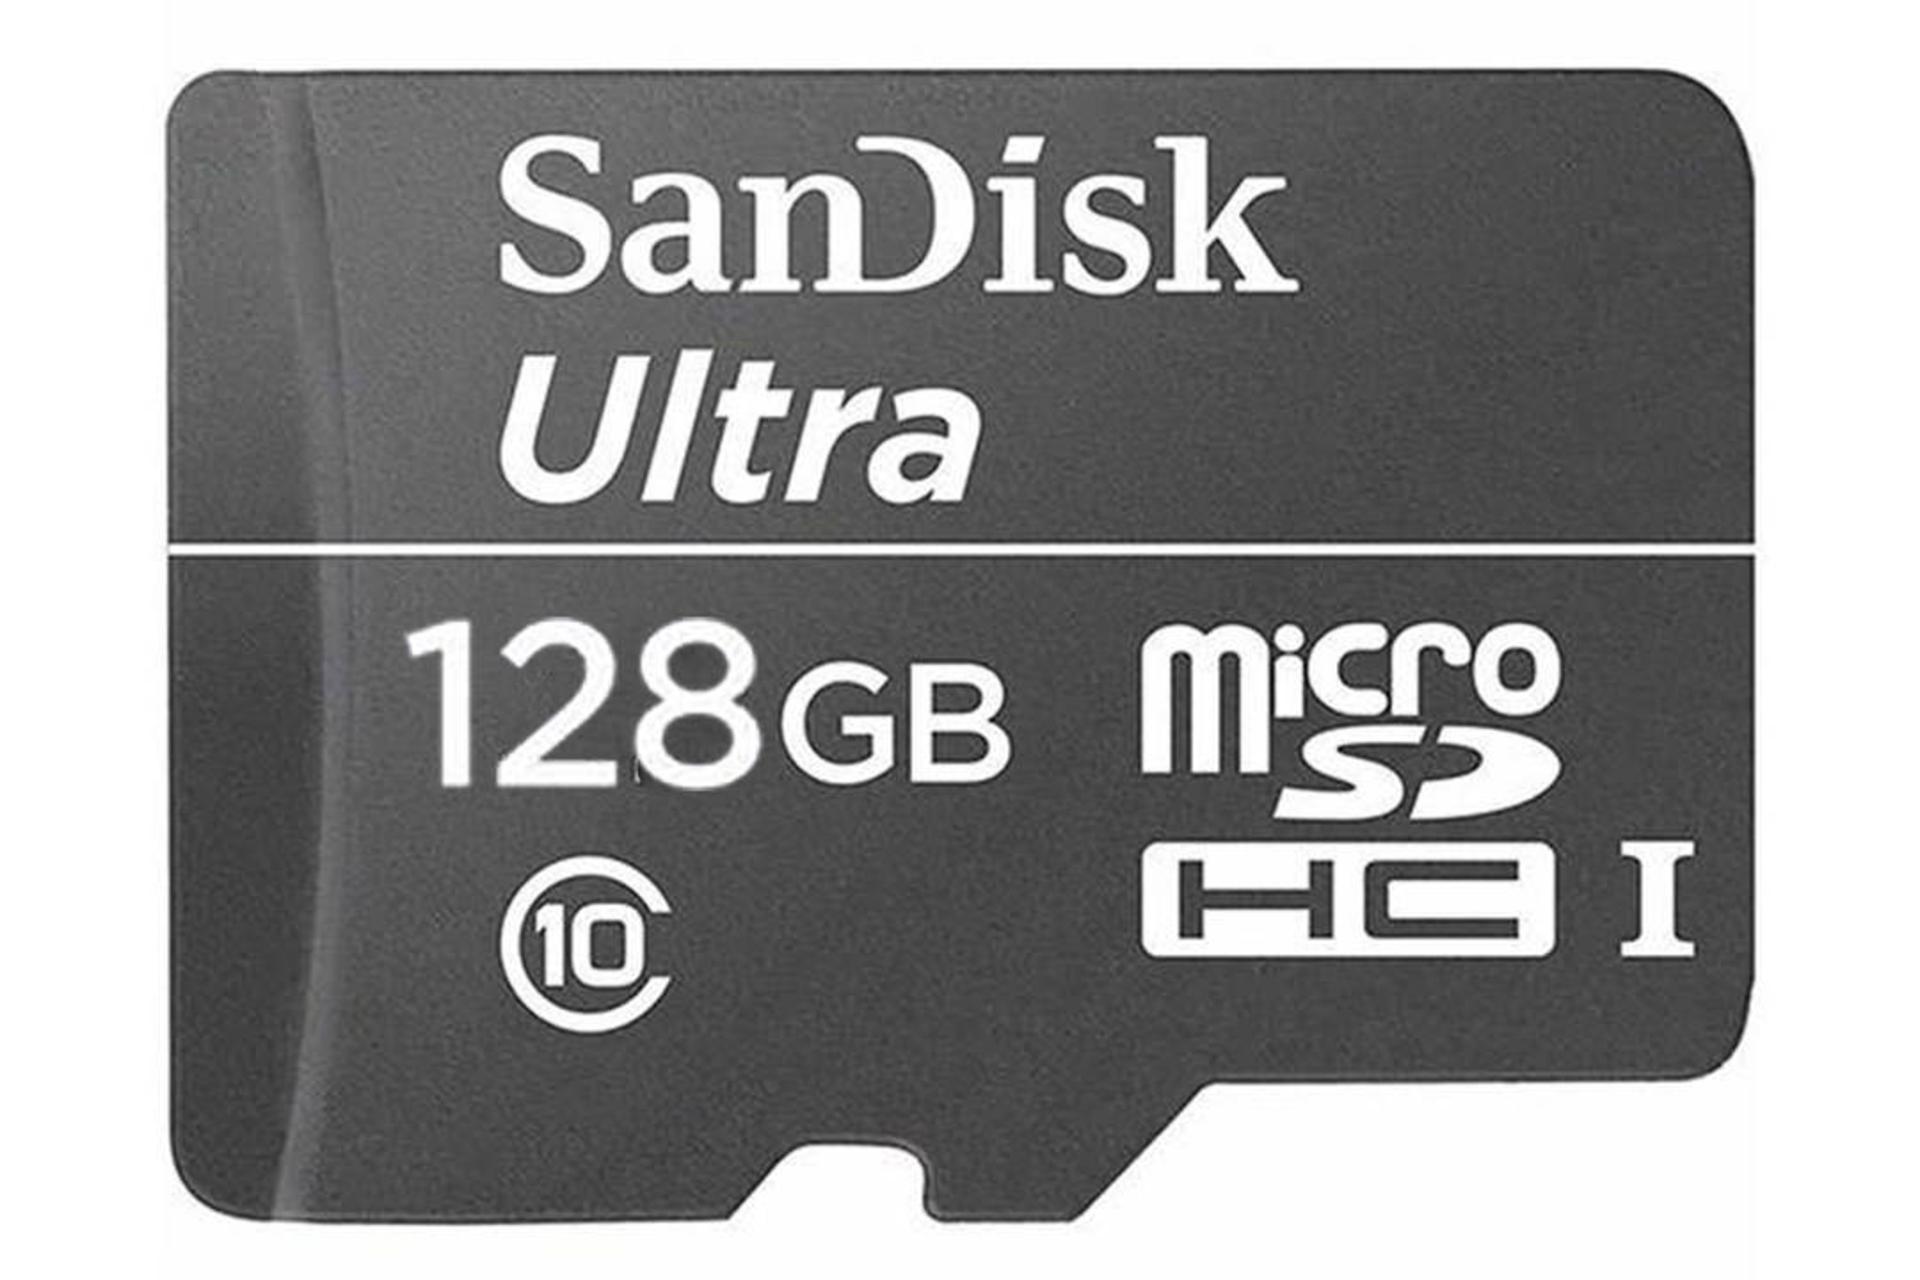 SanDisk Ultra microSDHC Class 10 UHS-I U1 128GB